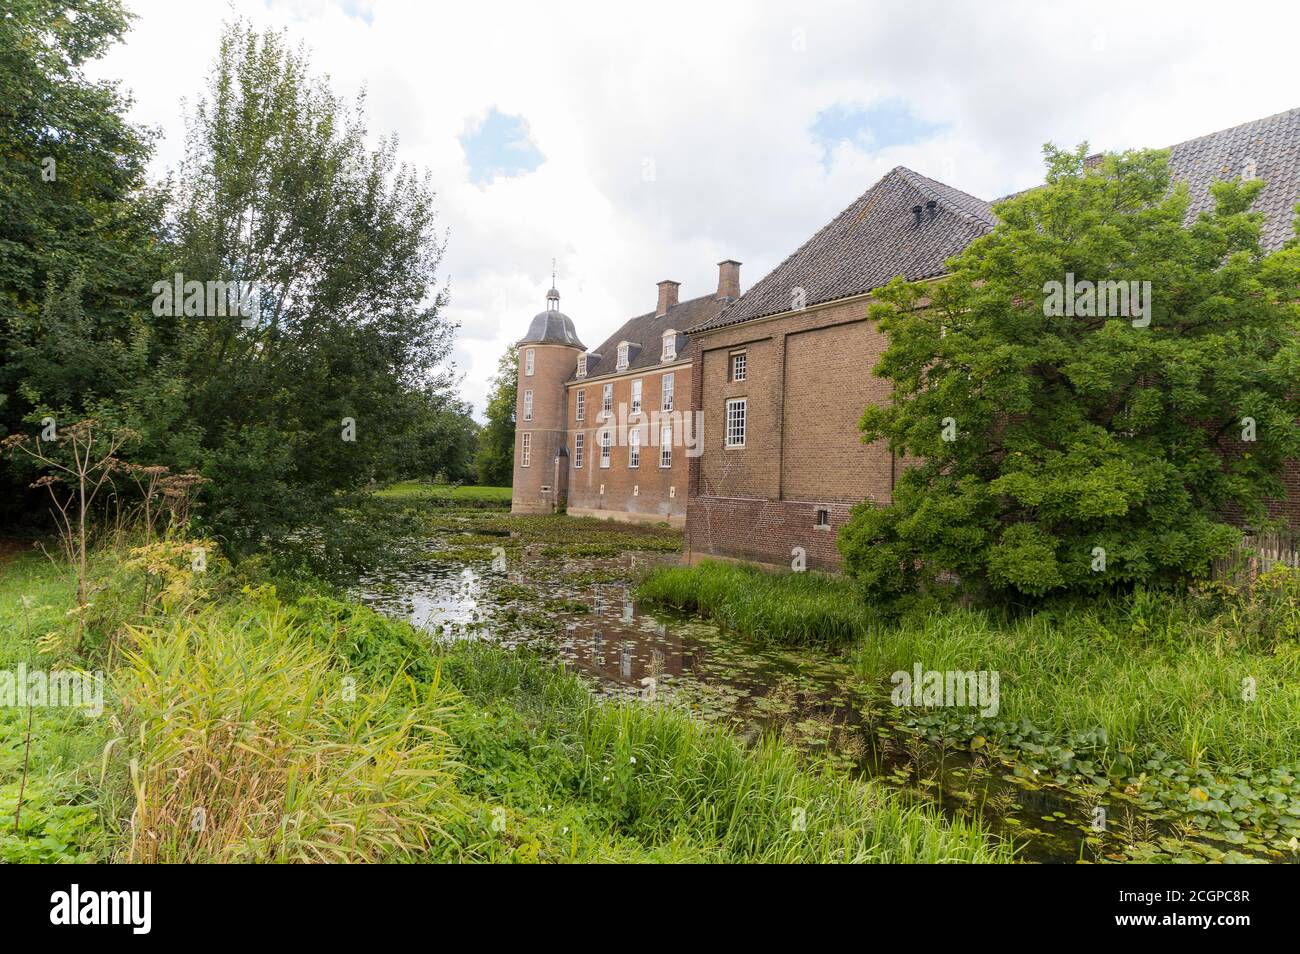 The Castle Slangenburg near Doetinchem, The Netherlands Stock Photo